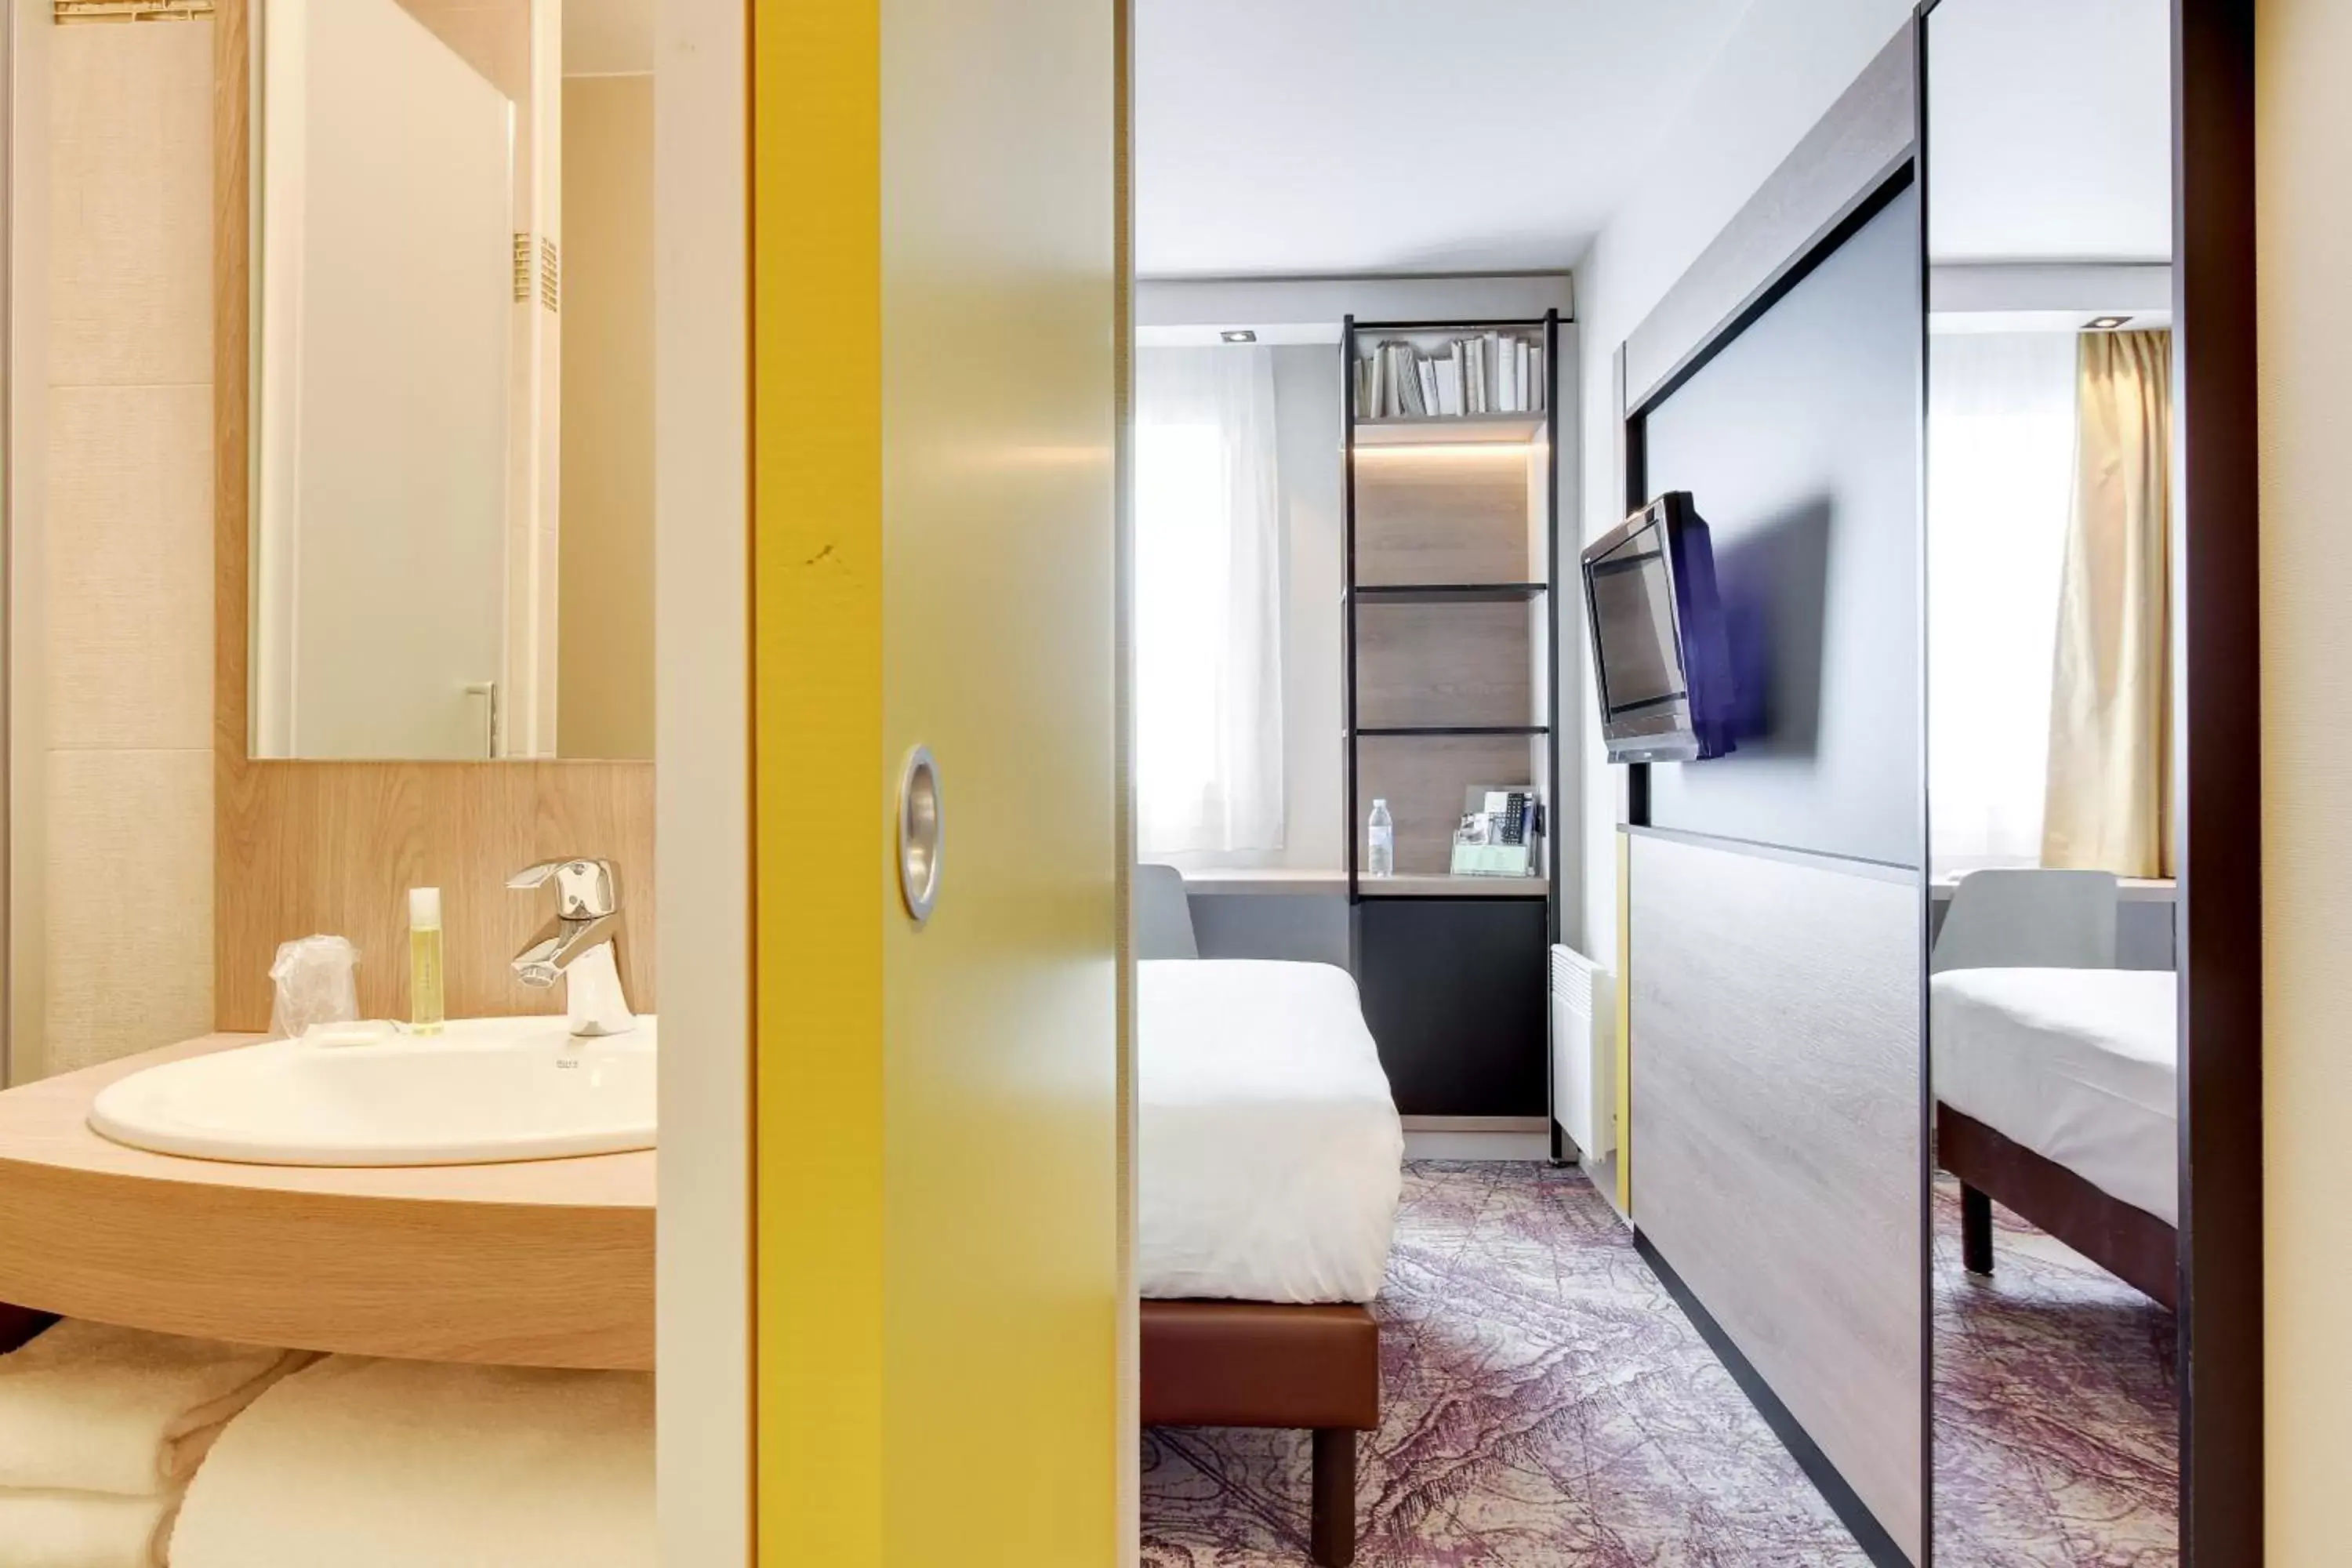 Photo of the whole room, Bathroom in Brit Hotel Brest Le Relecq Kerhuon